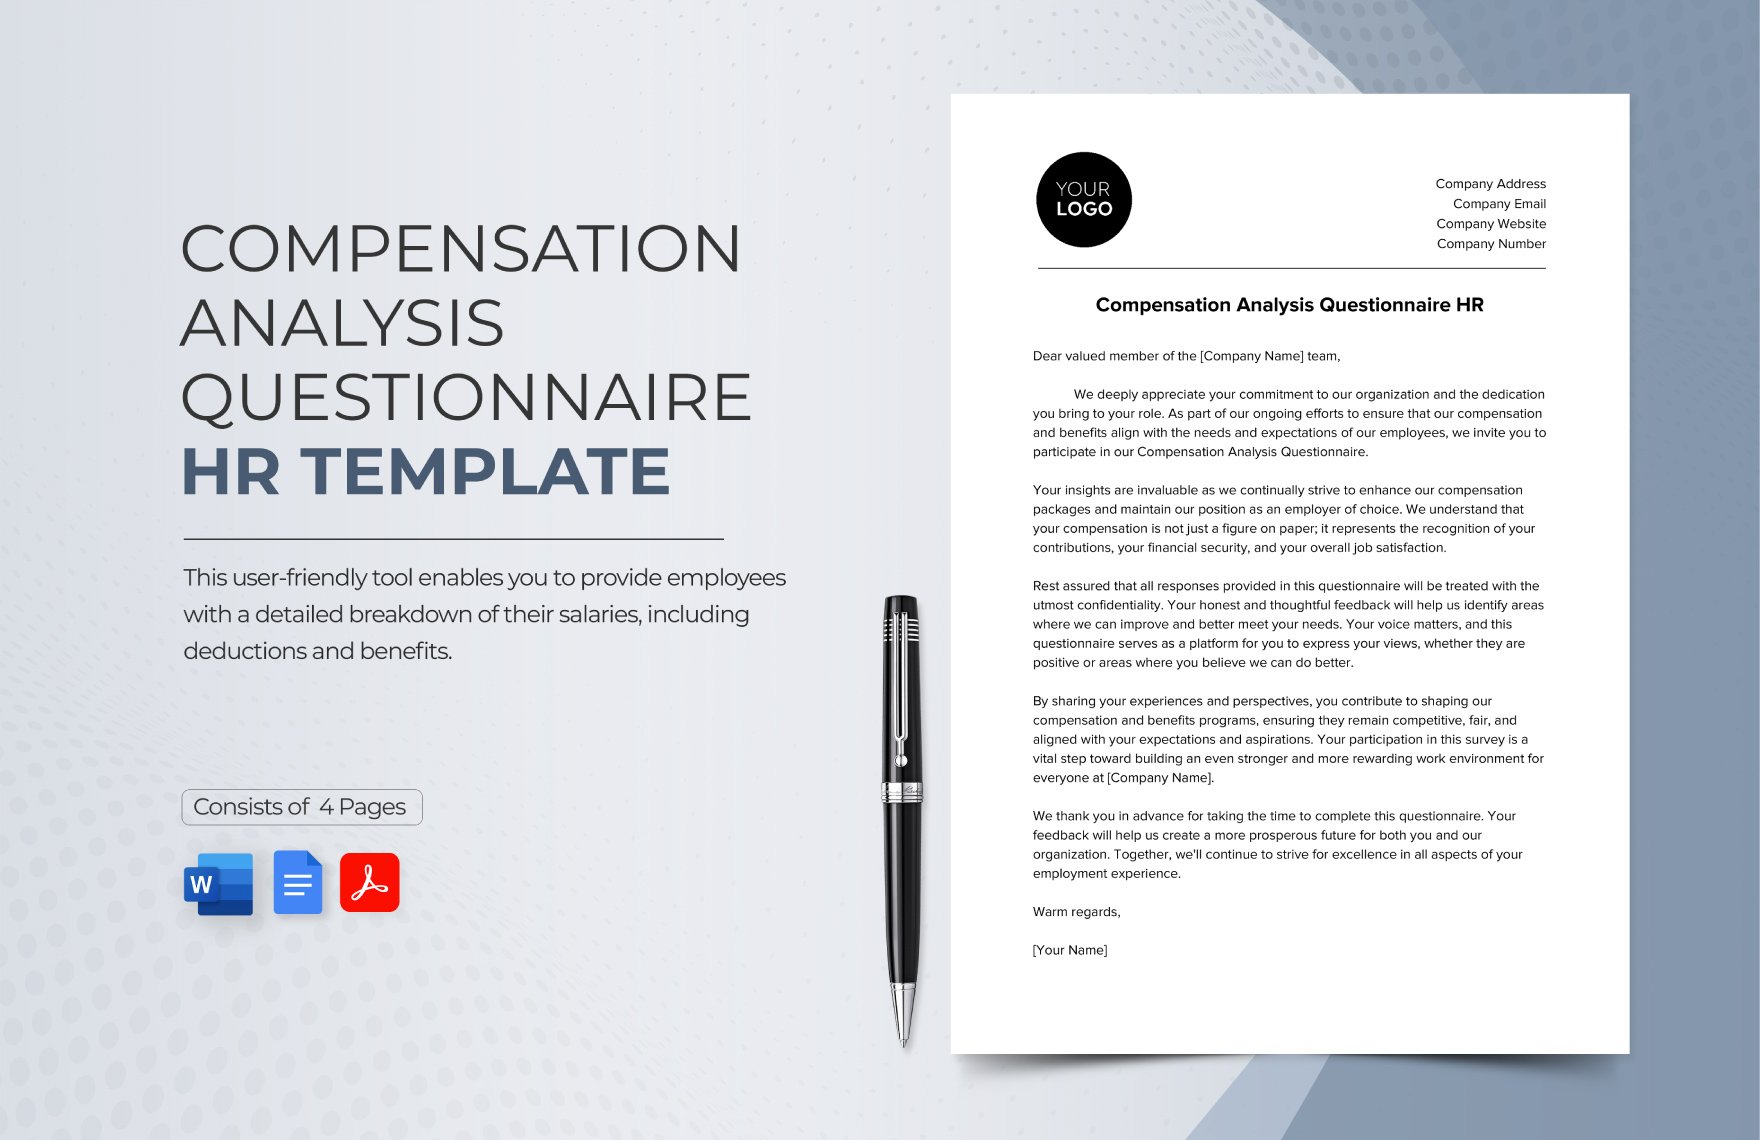 Compensation Analysis Questionnaire HR Template